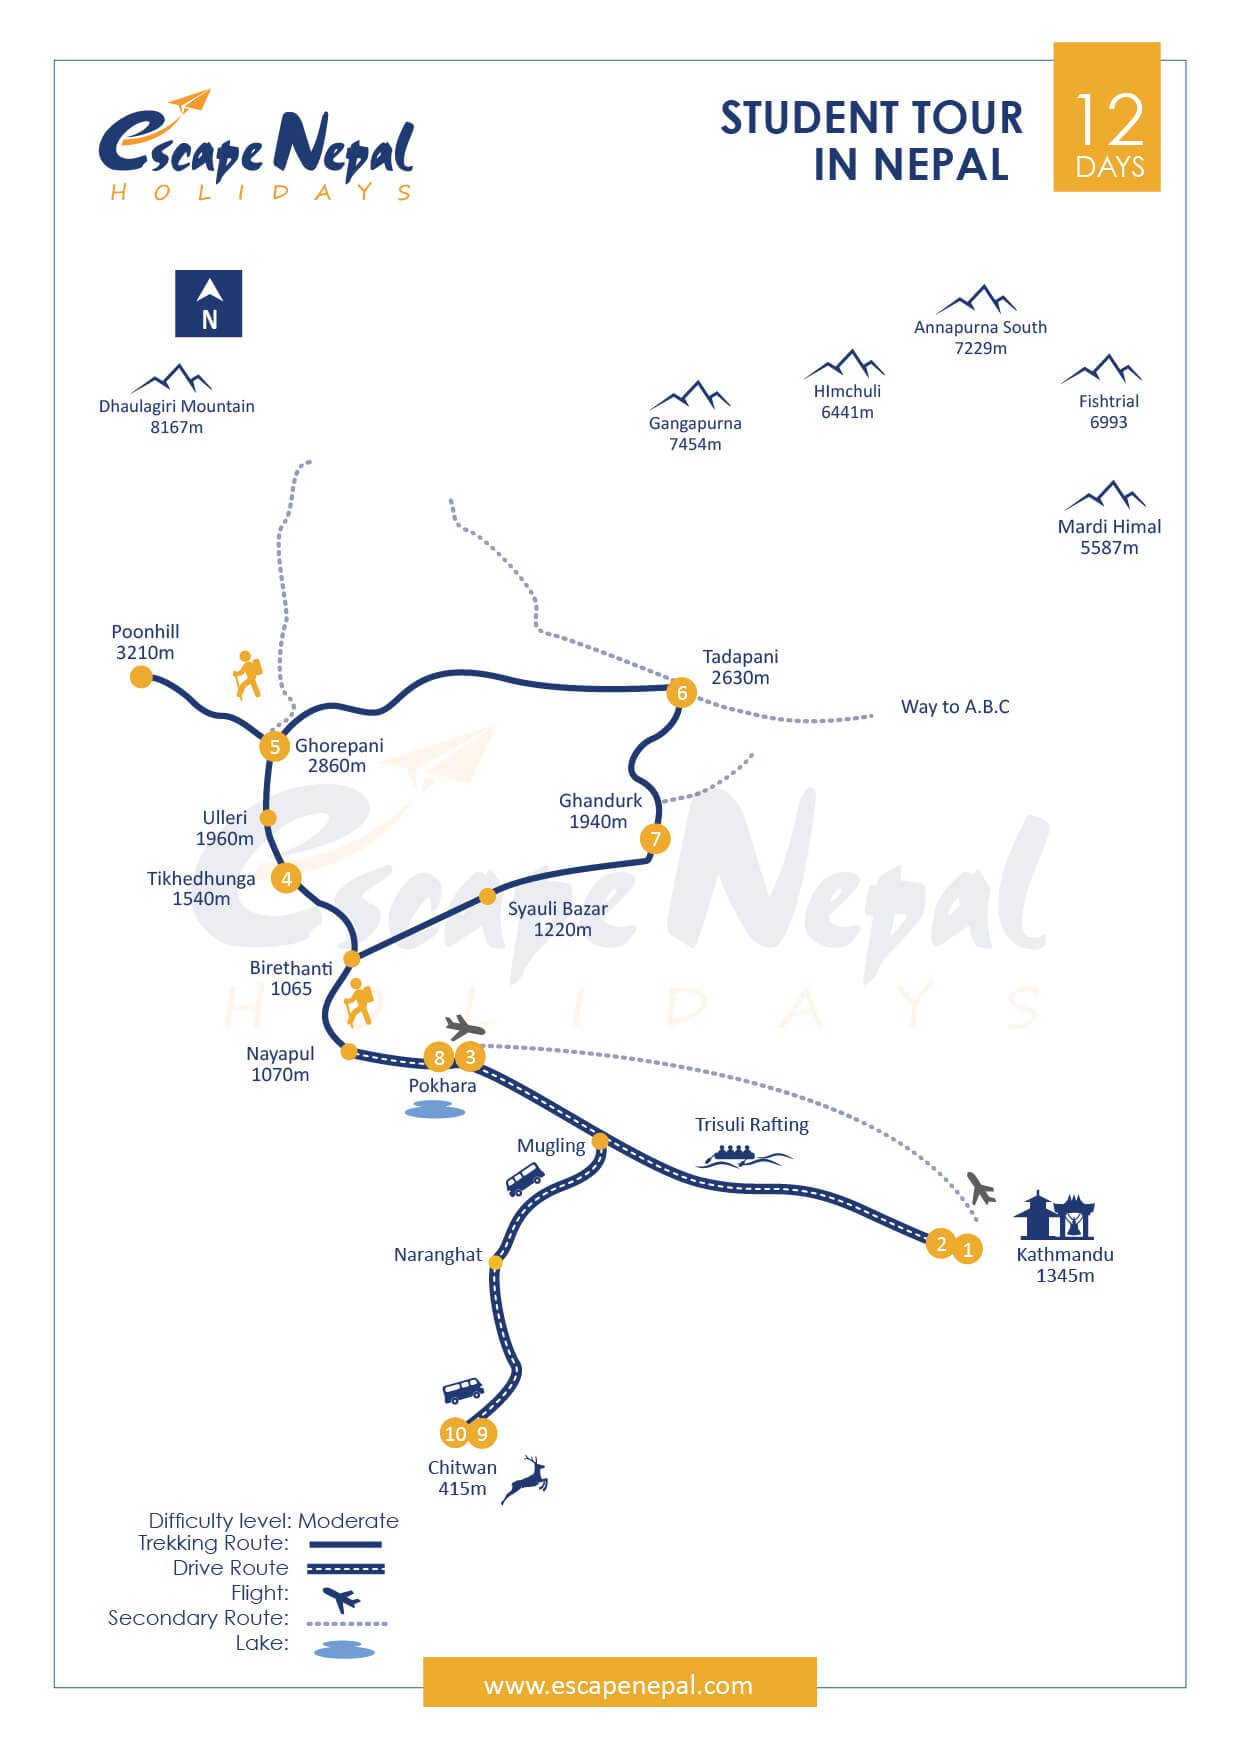 NEPAL STUDENT TOUR map